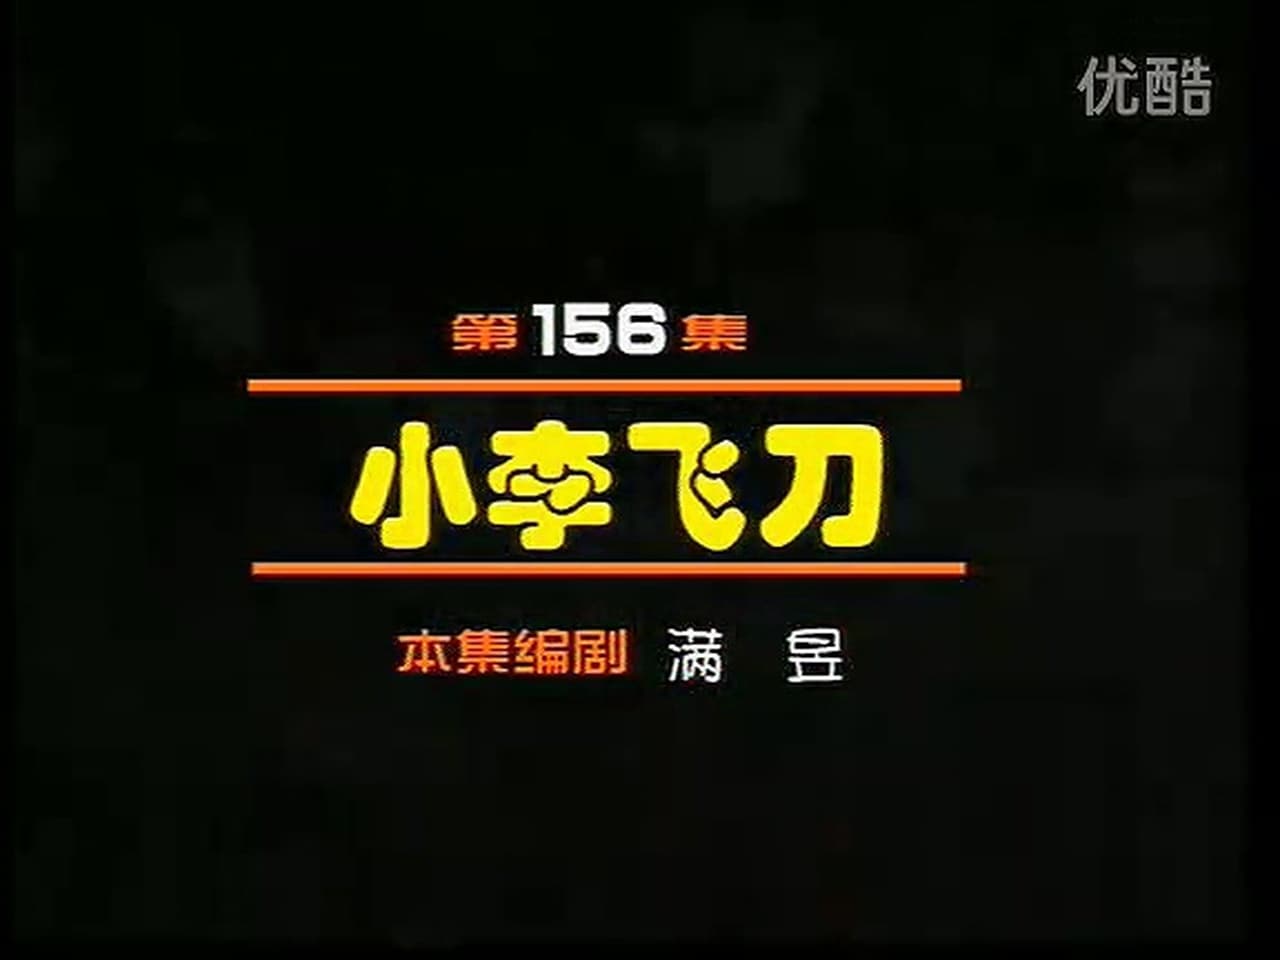 Episode 156